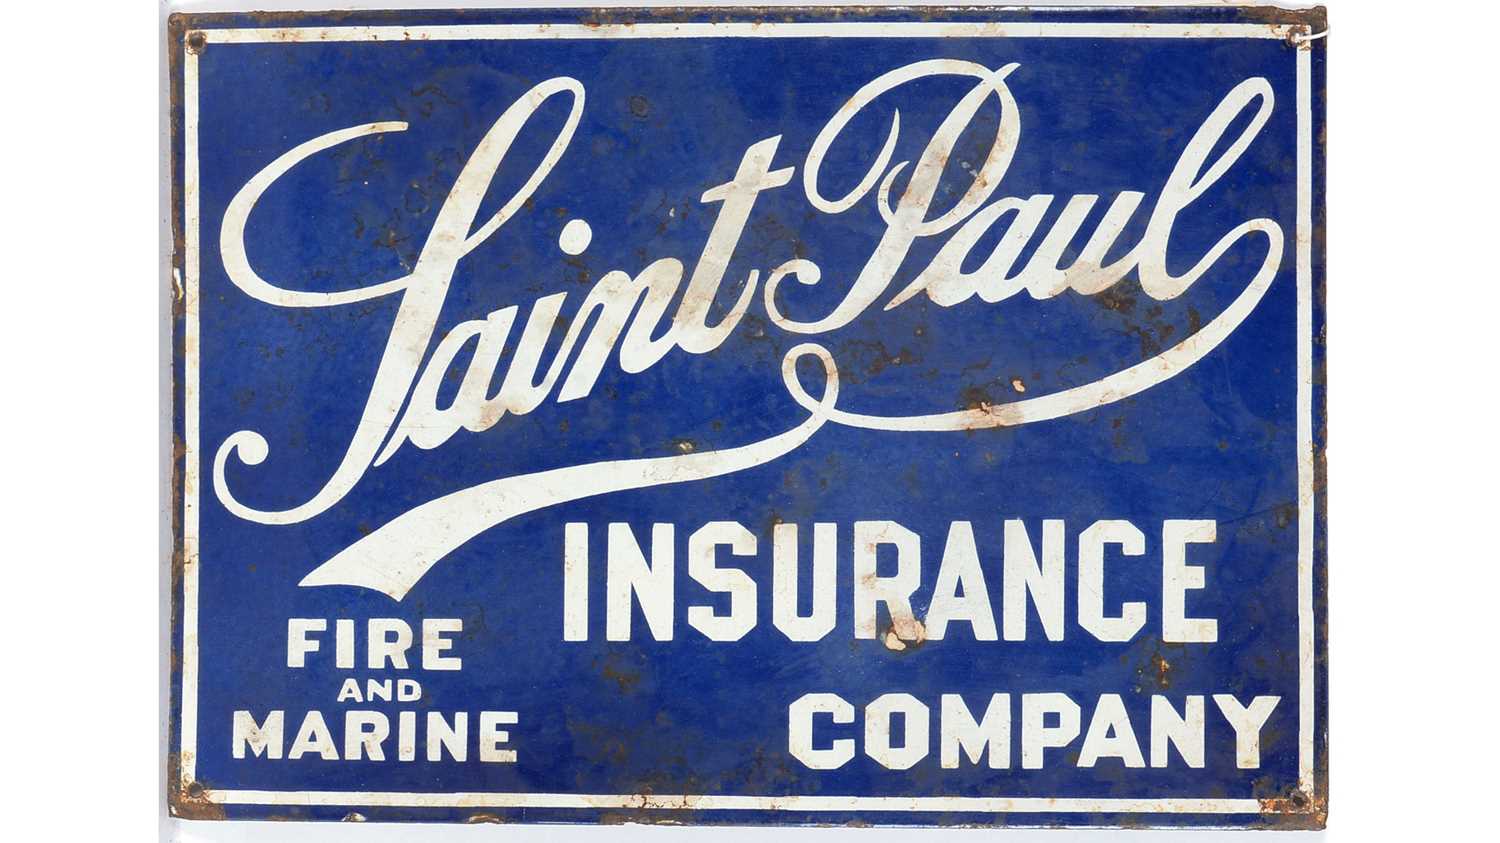 Saint Paul Insurance Company enamel advertising sign